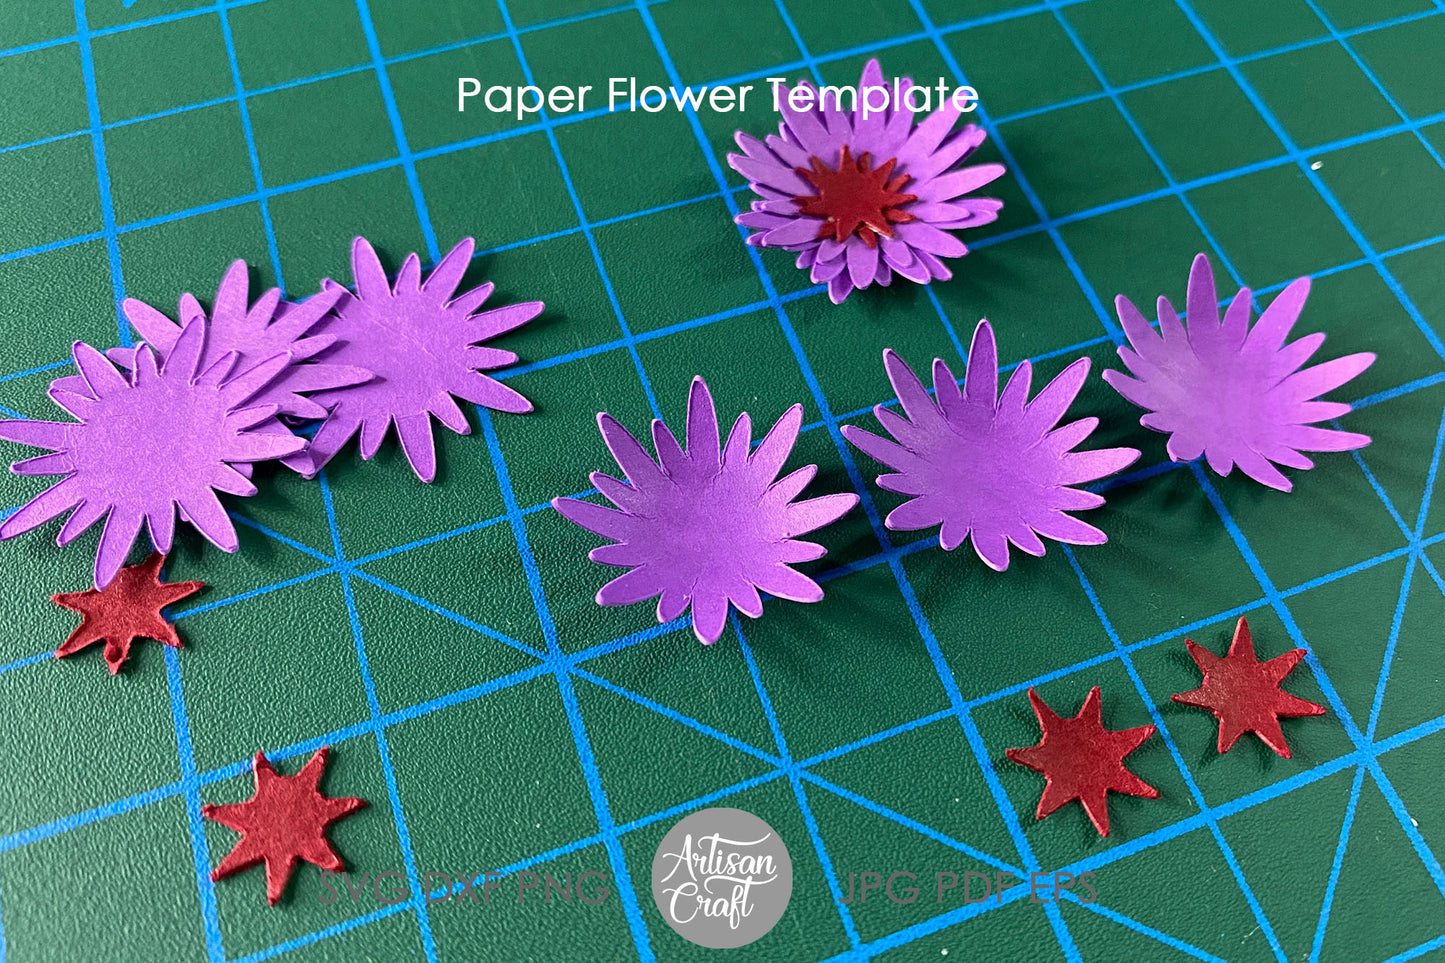 Paper flower SVG | easy paper flowers